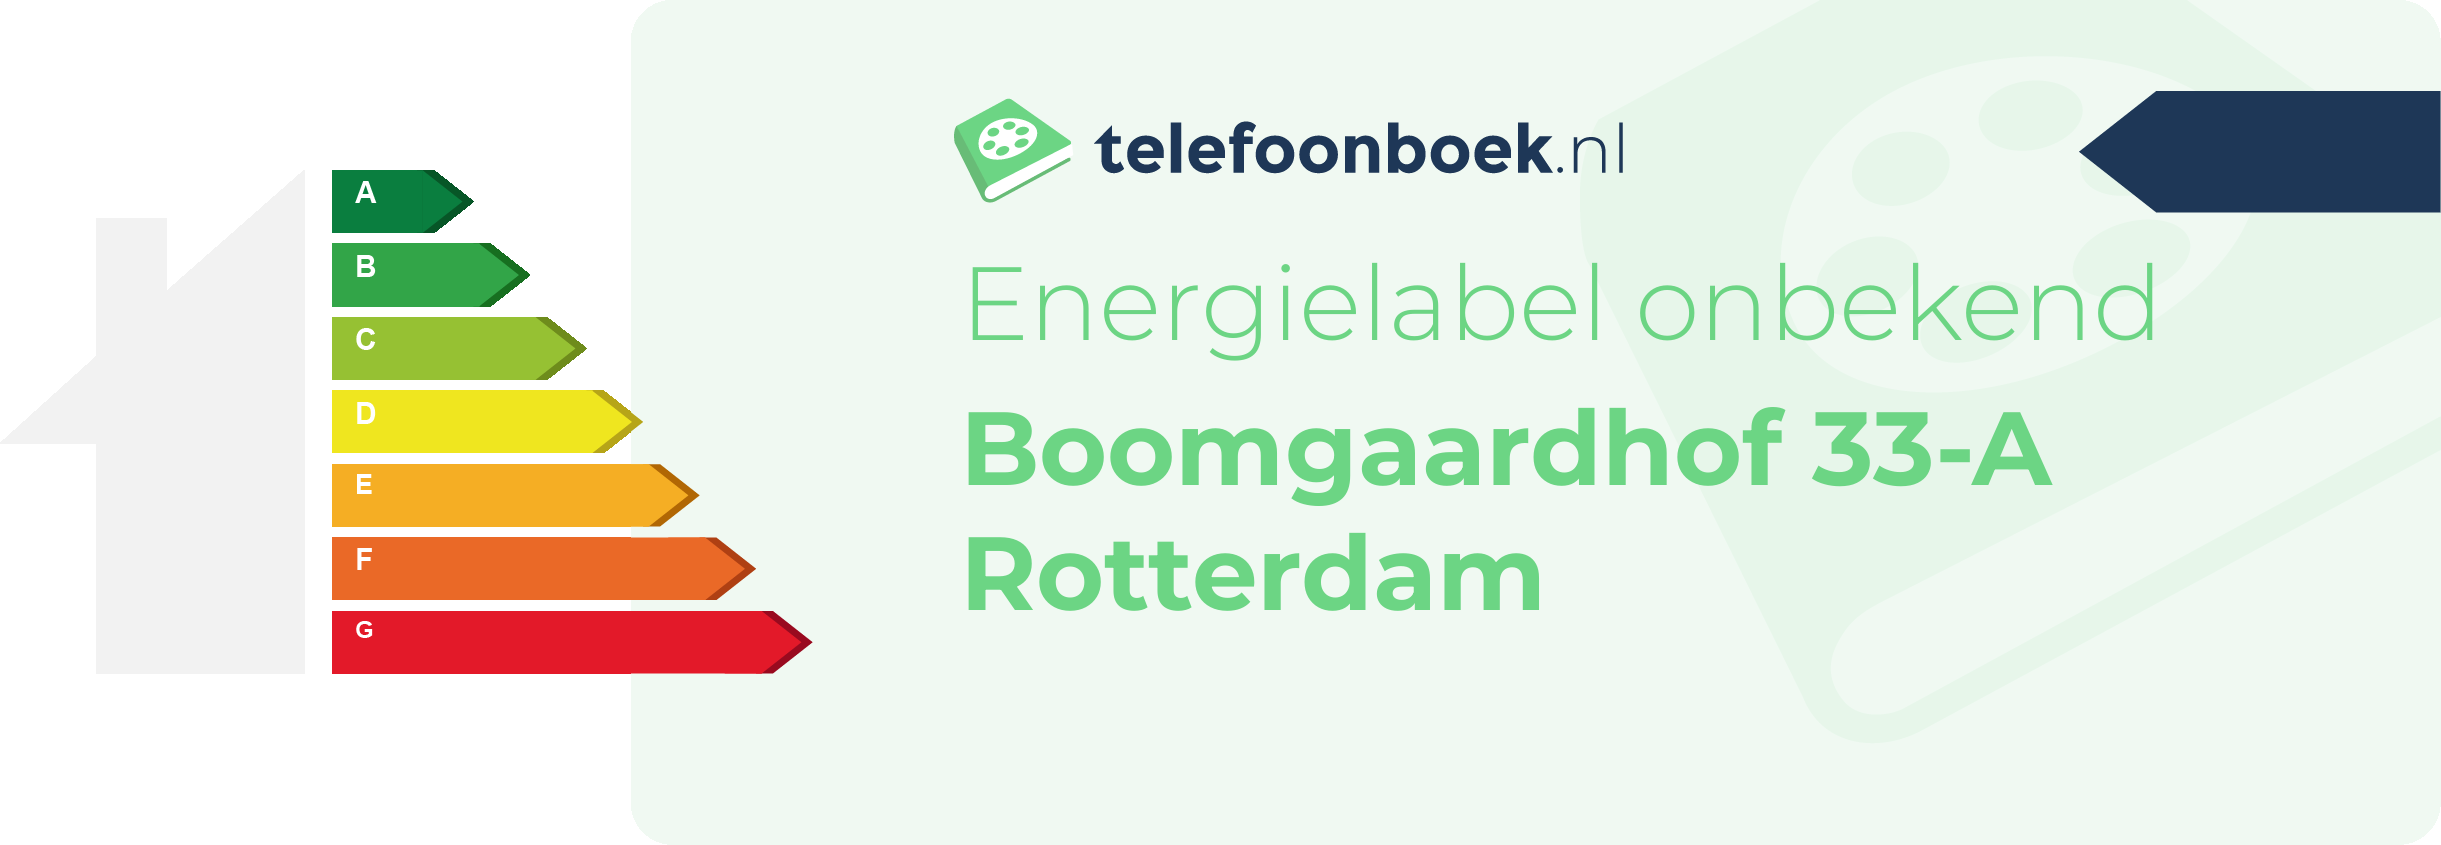 Energielabel Boomgaardhof 33-A Rotterdam